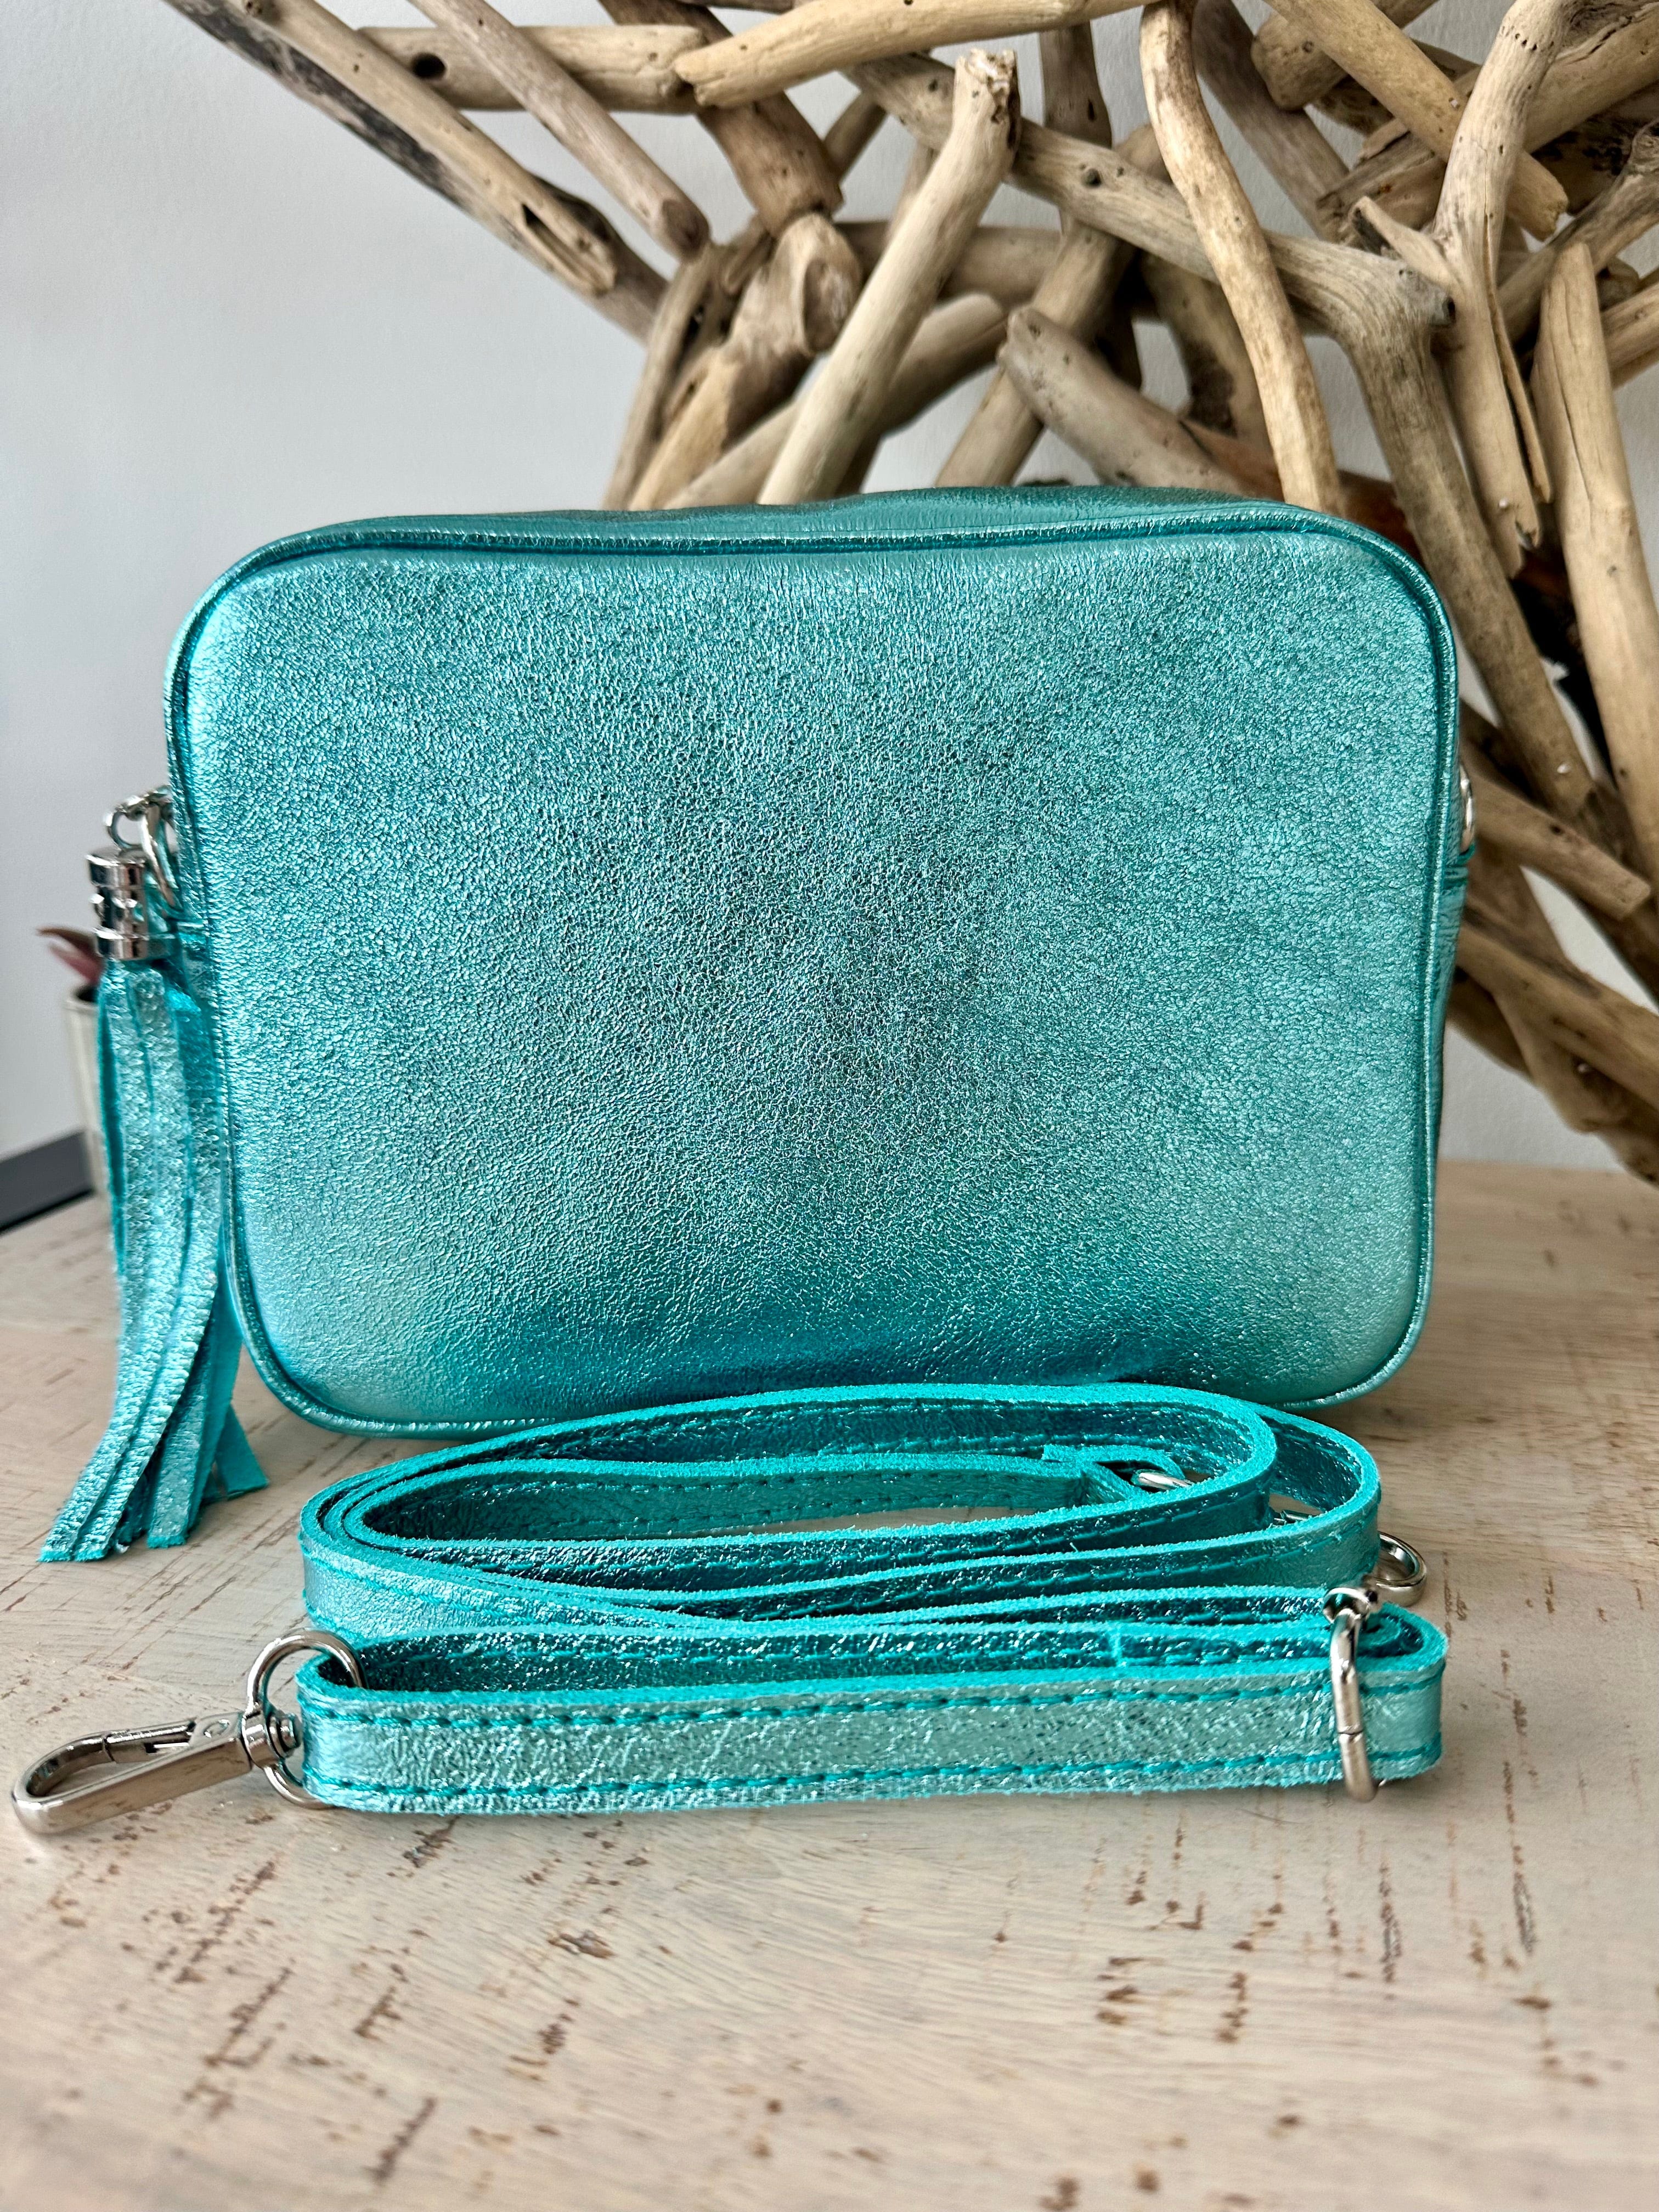 lusciousscarves Metallic Turquoise Italian Leather Camera Bag Style Crossbody Bag